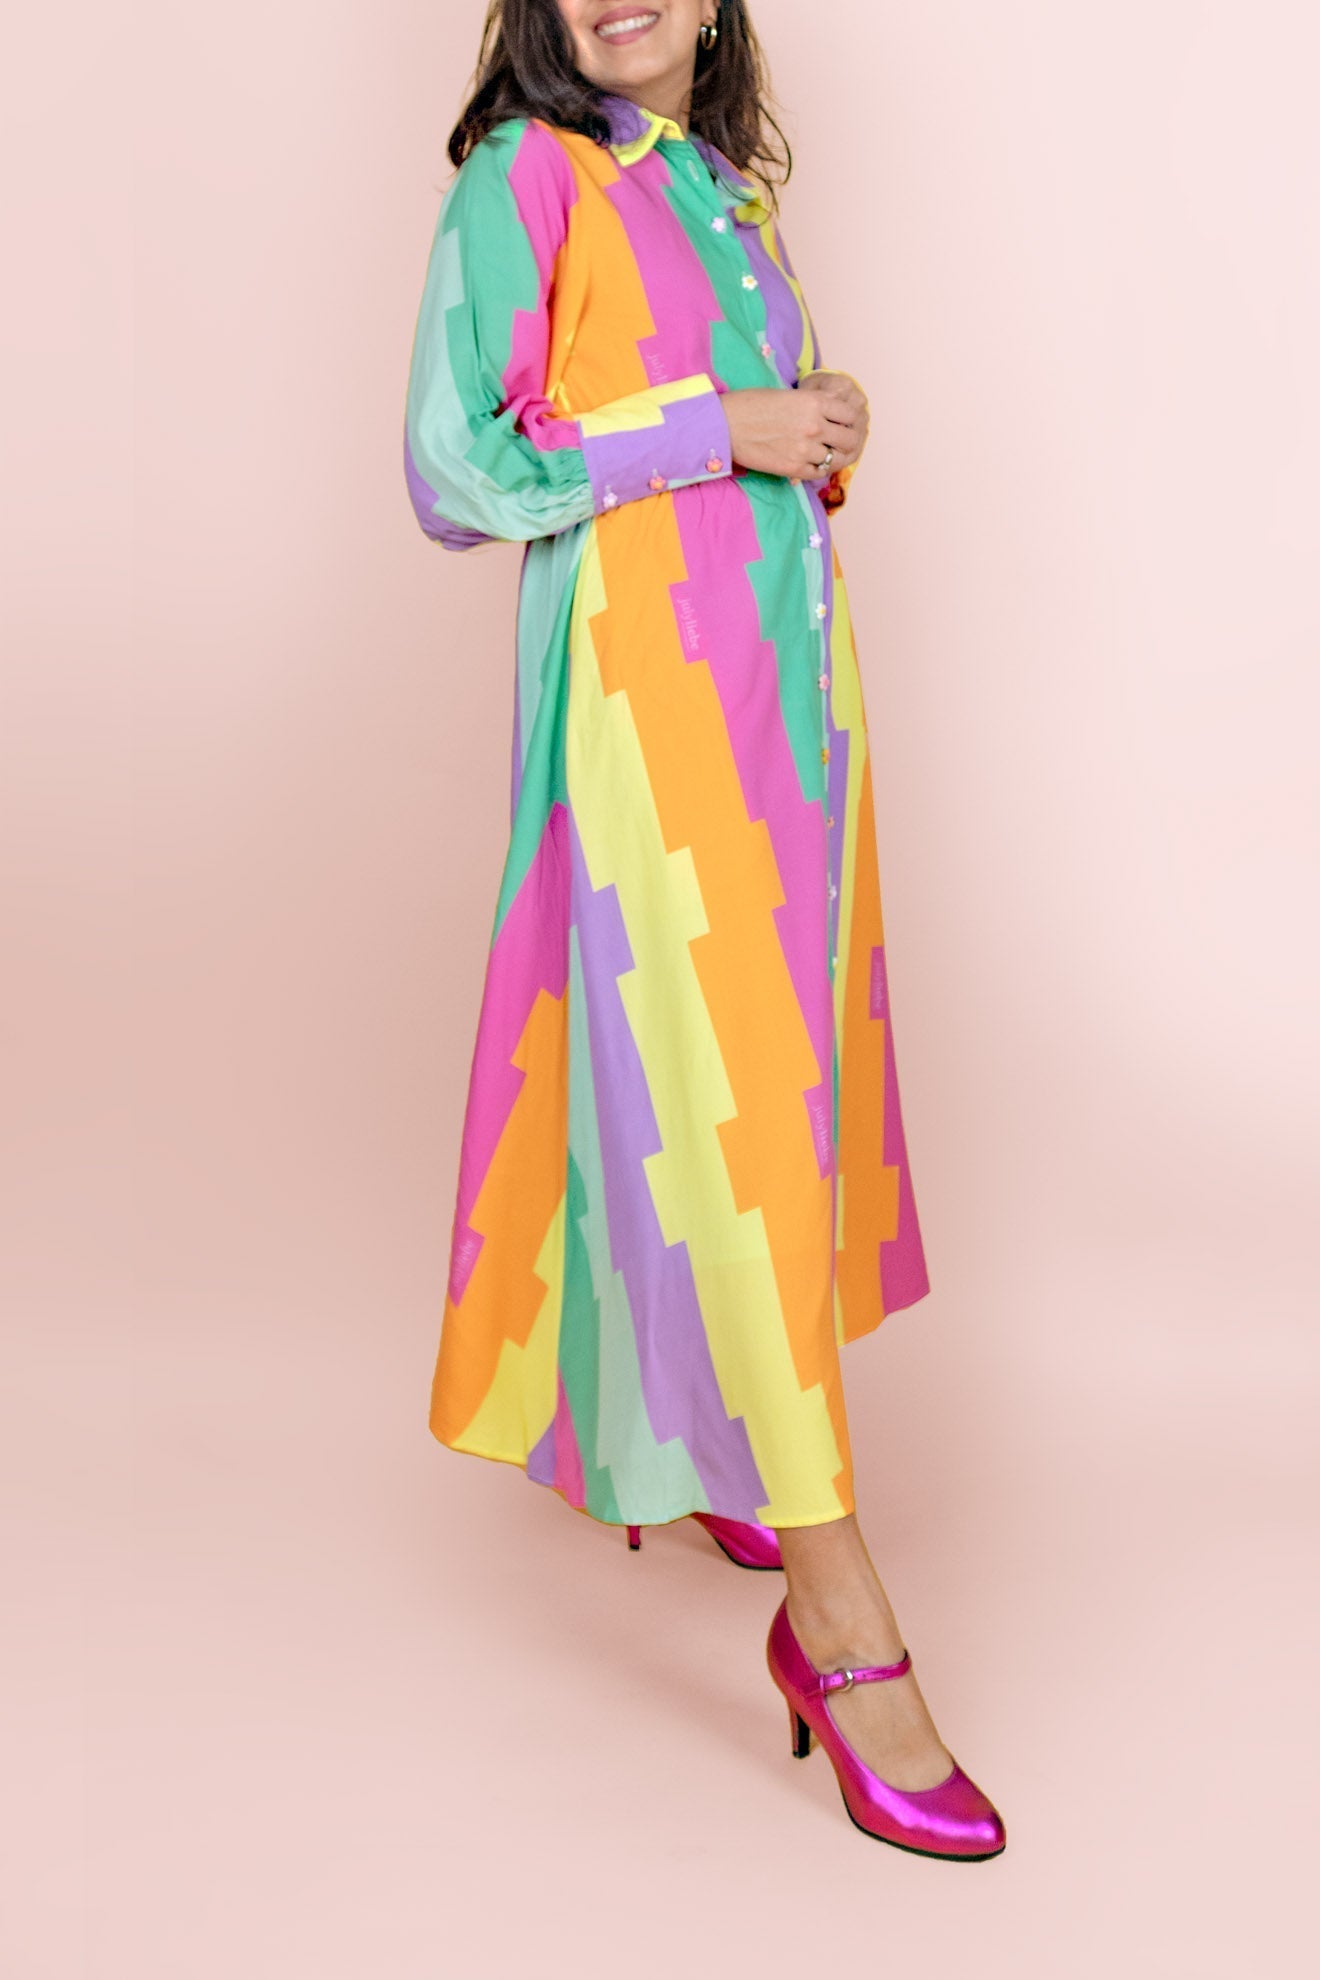 Sample Colorful Stripes Dress #1156 (M)